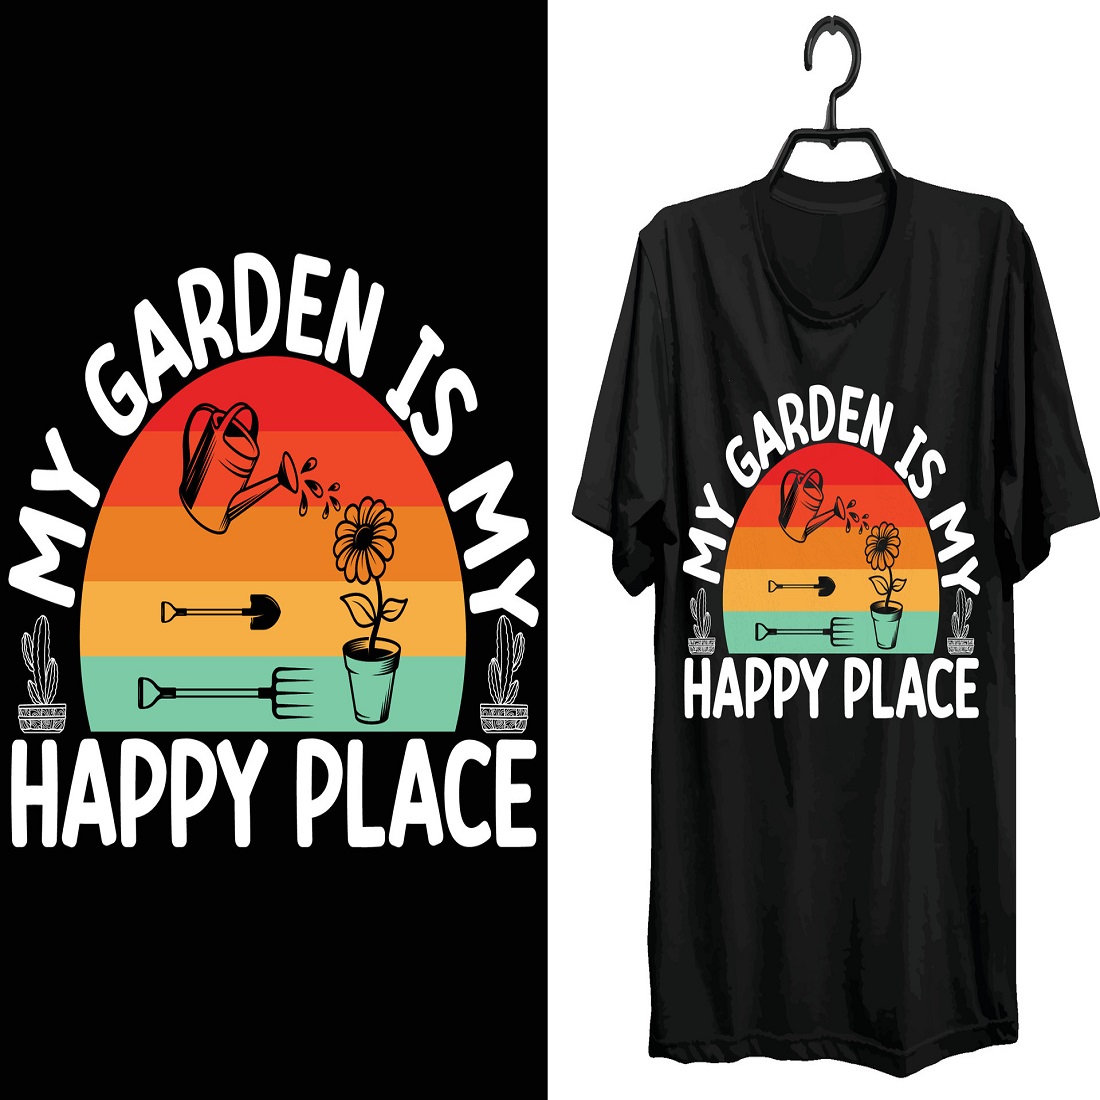 Gardening t-shirt design funny gift item gardening t-shirt cover image.